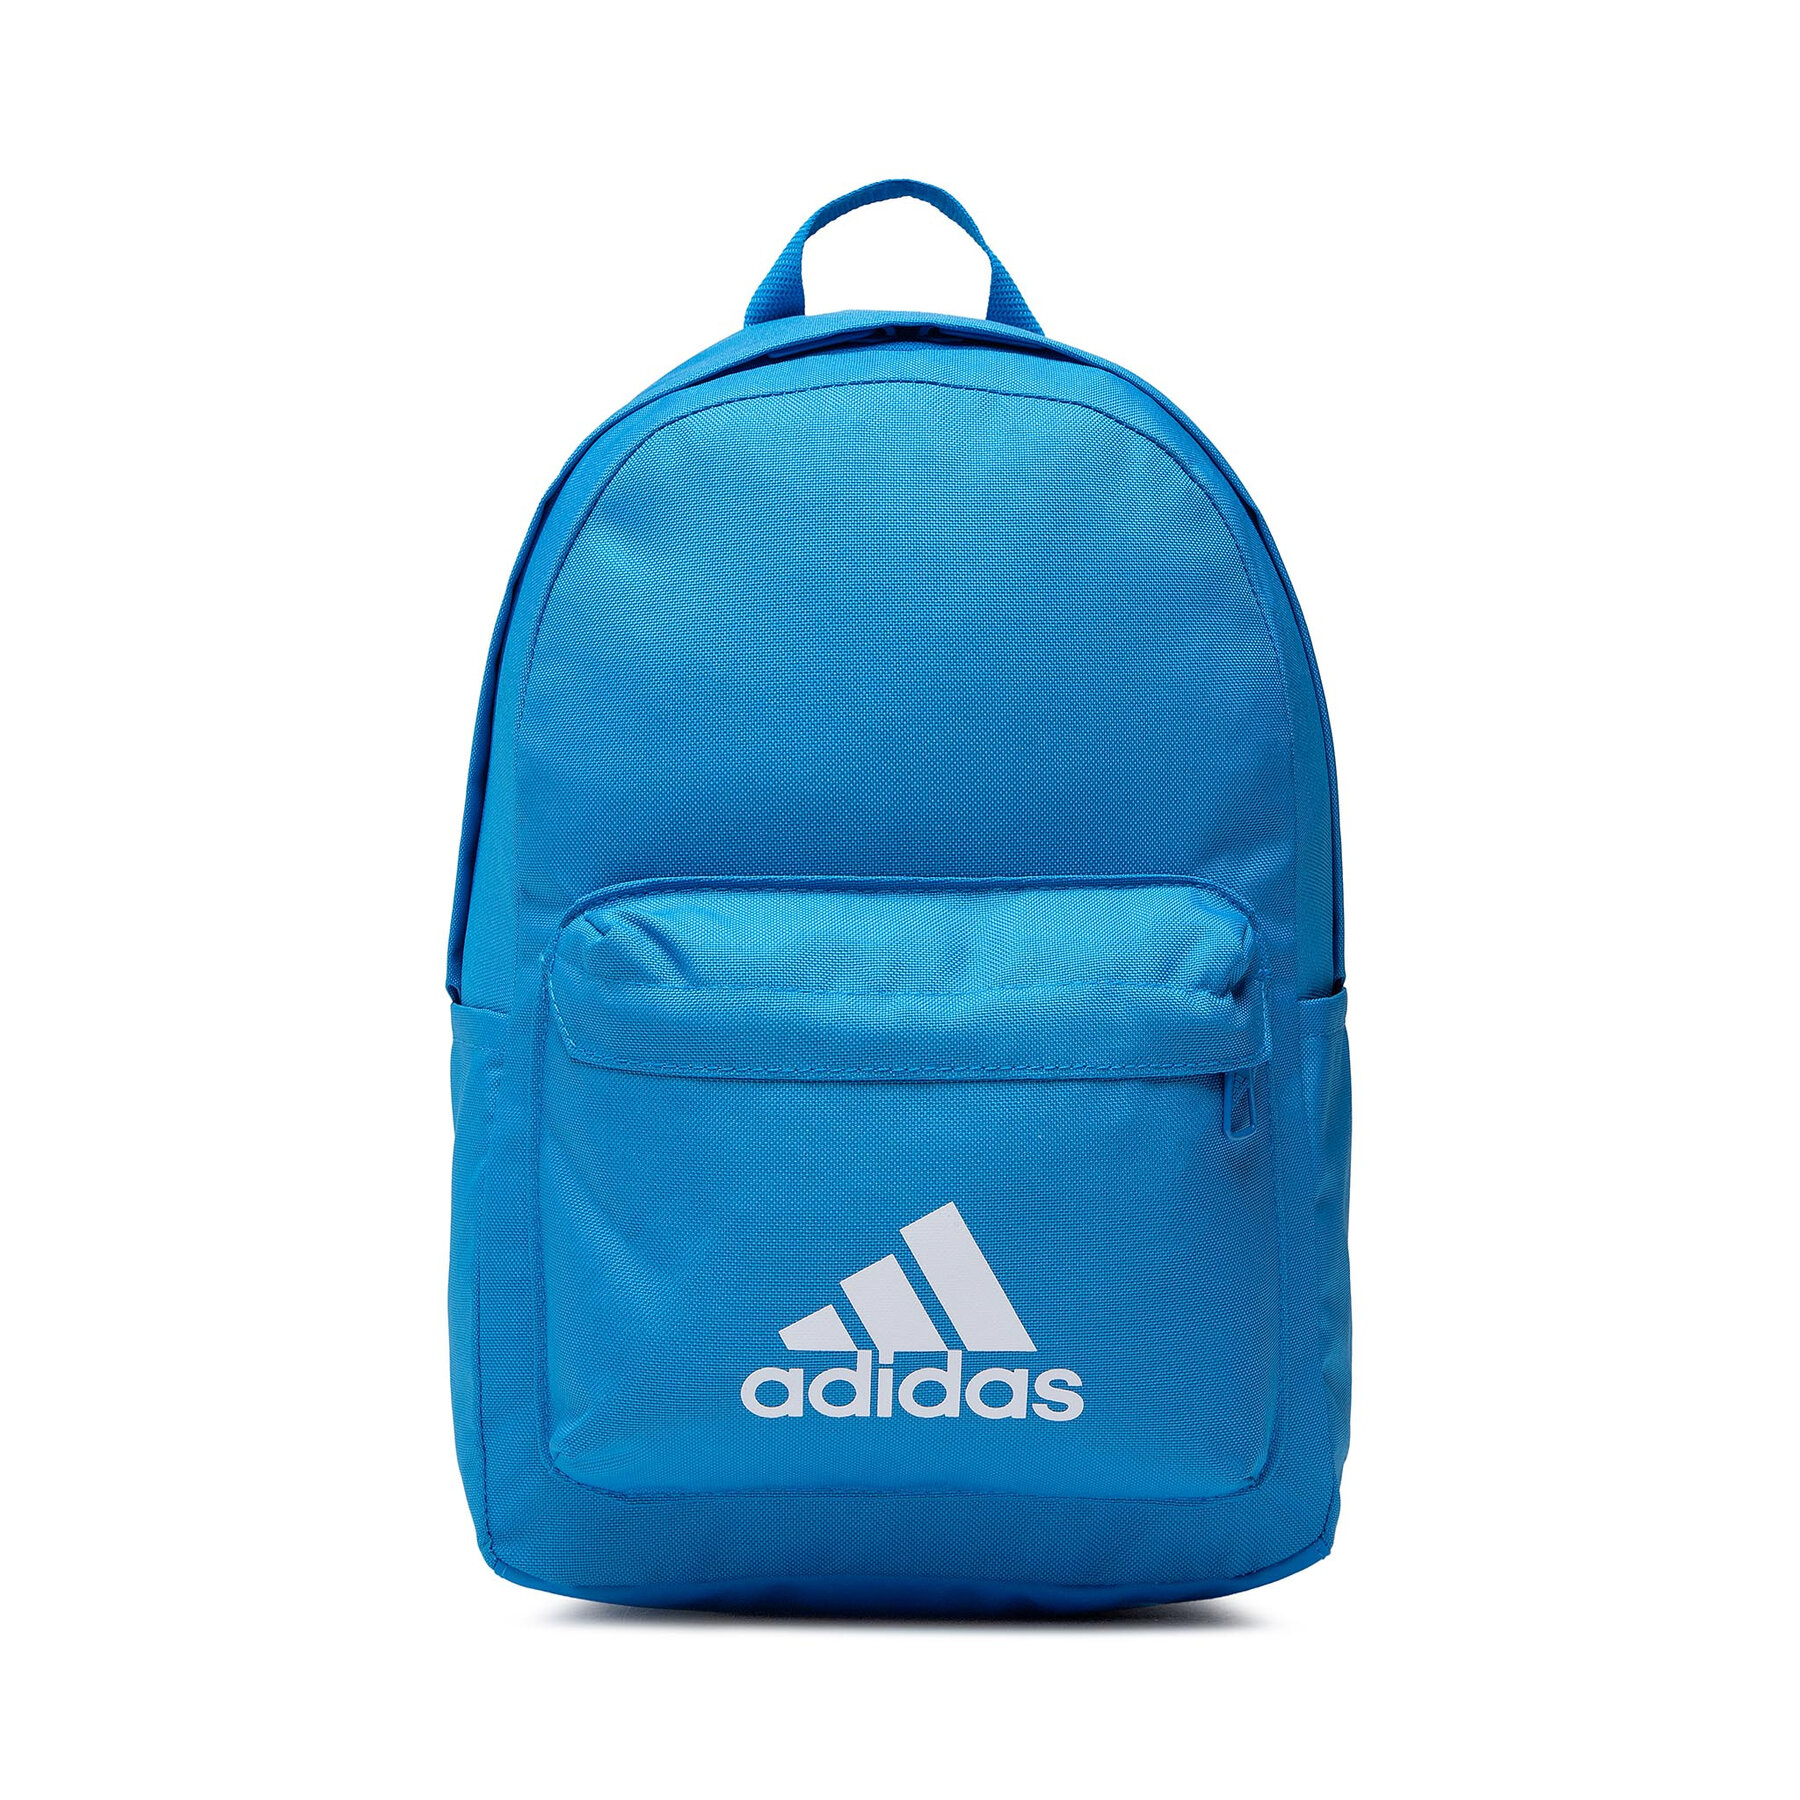 Comprar en oferta Adidas Backpack blue rush